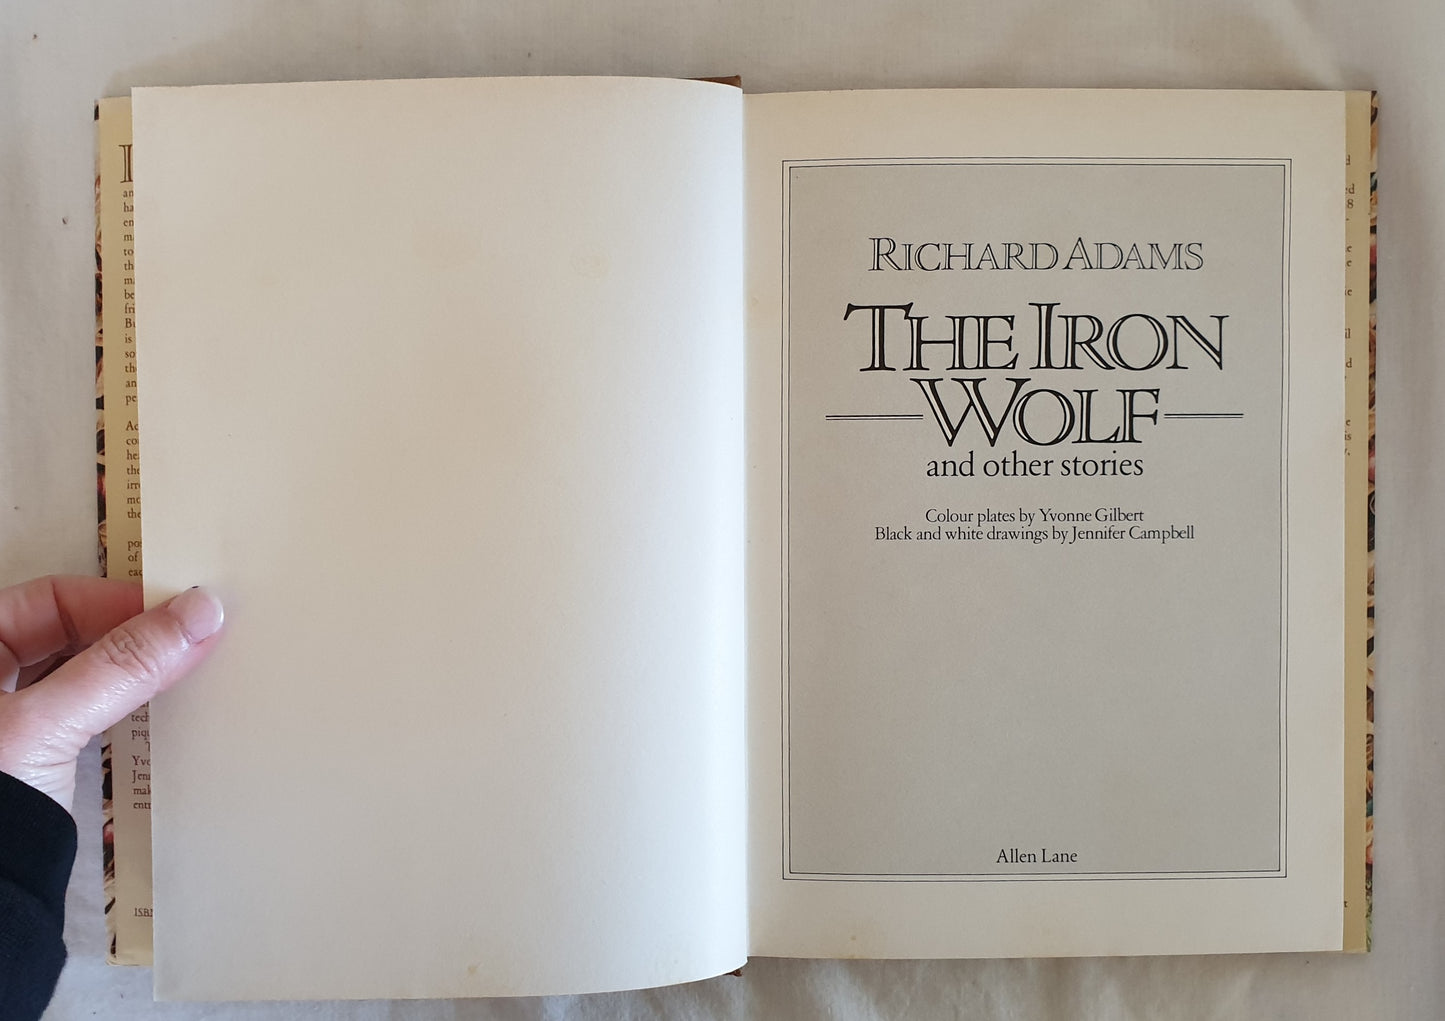 The Iron Wolf by Richard Adams